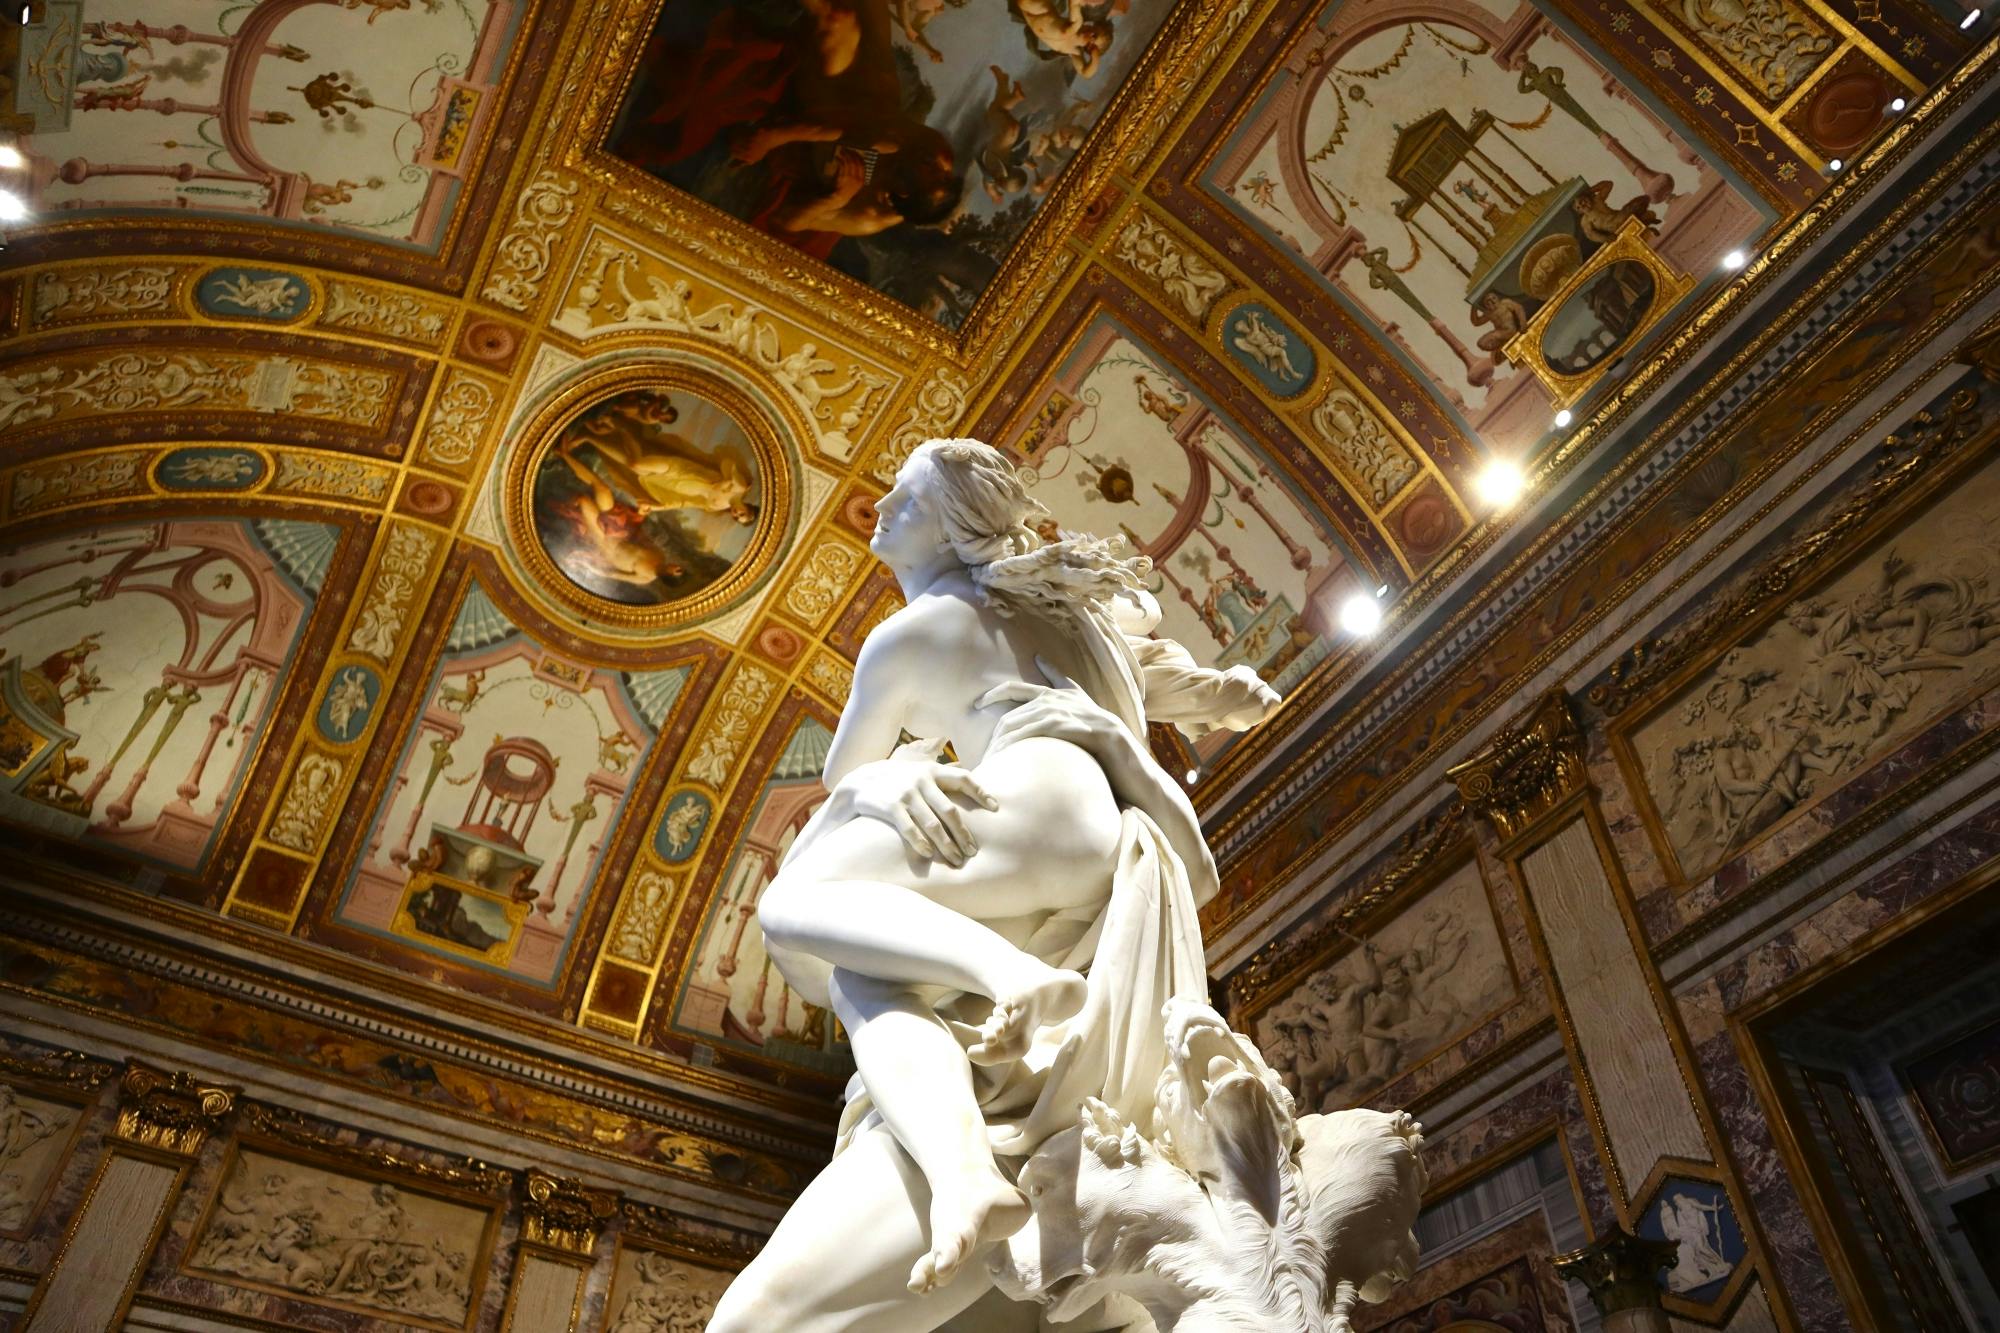 Borghese Gallery skip-the-line tickets en Gardens-golfkartour